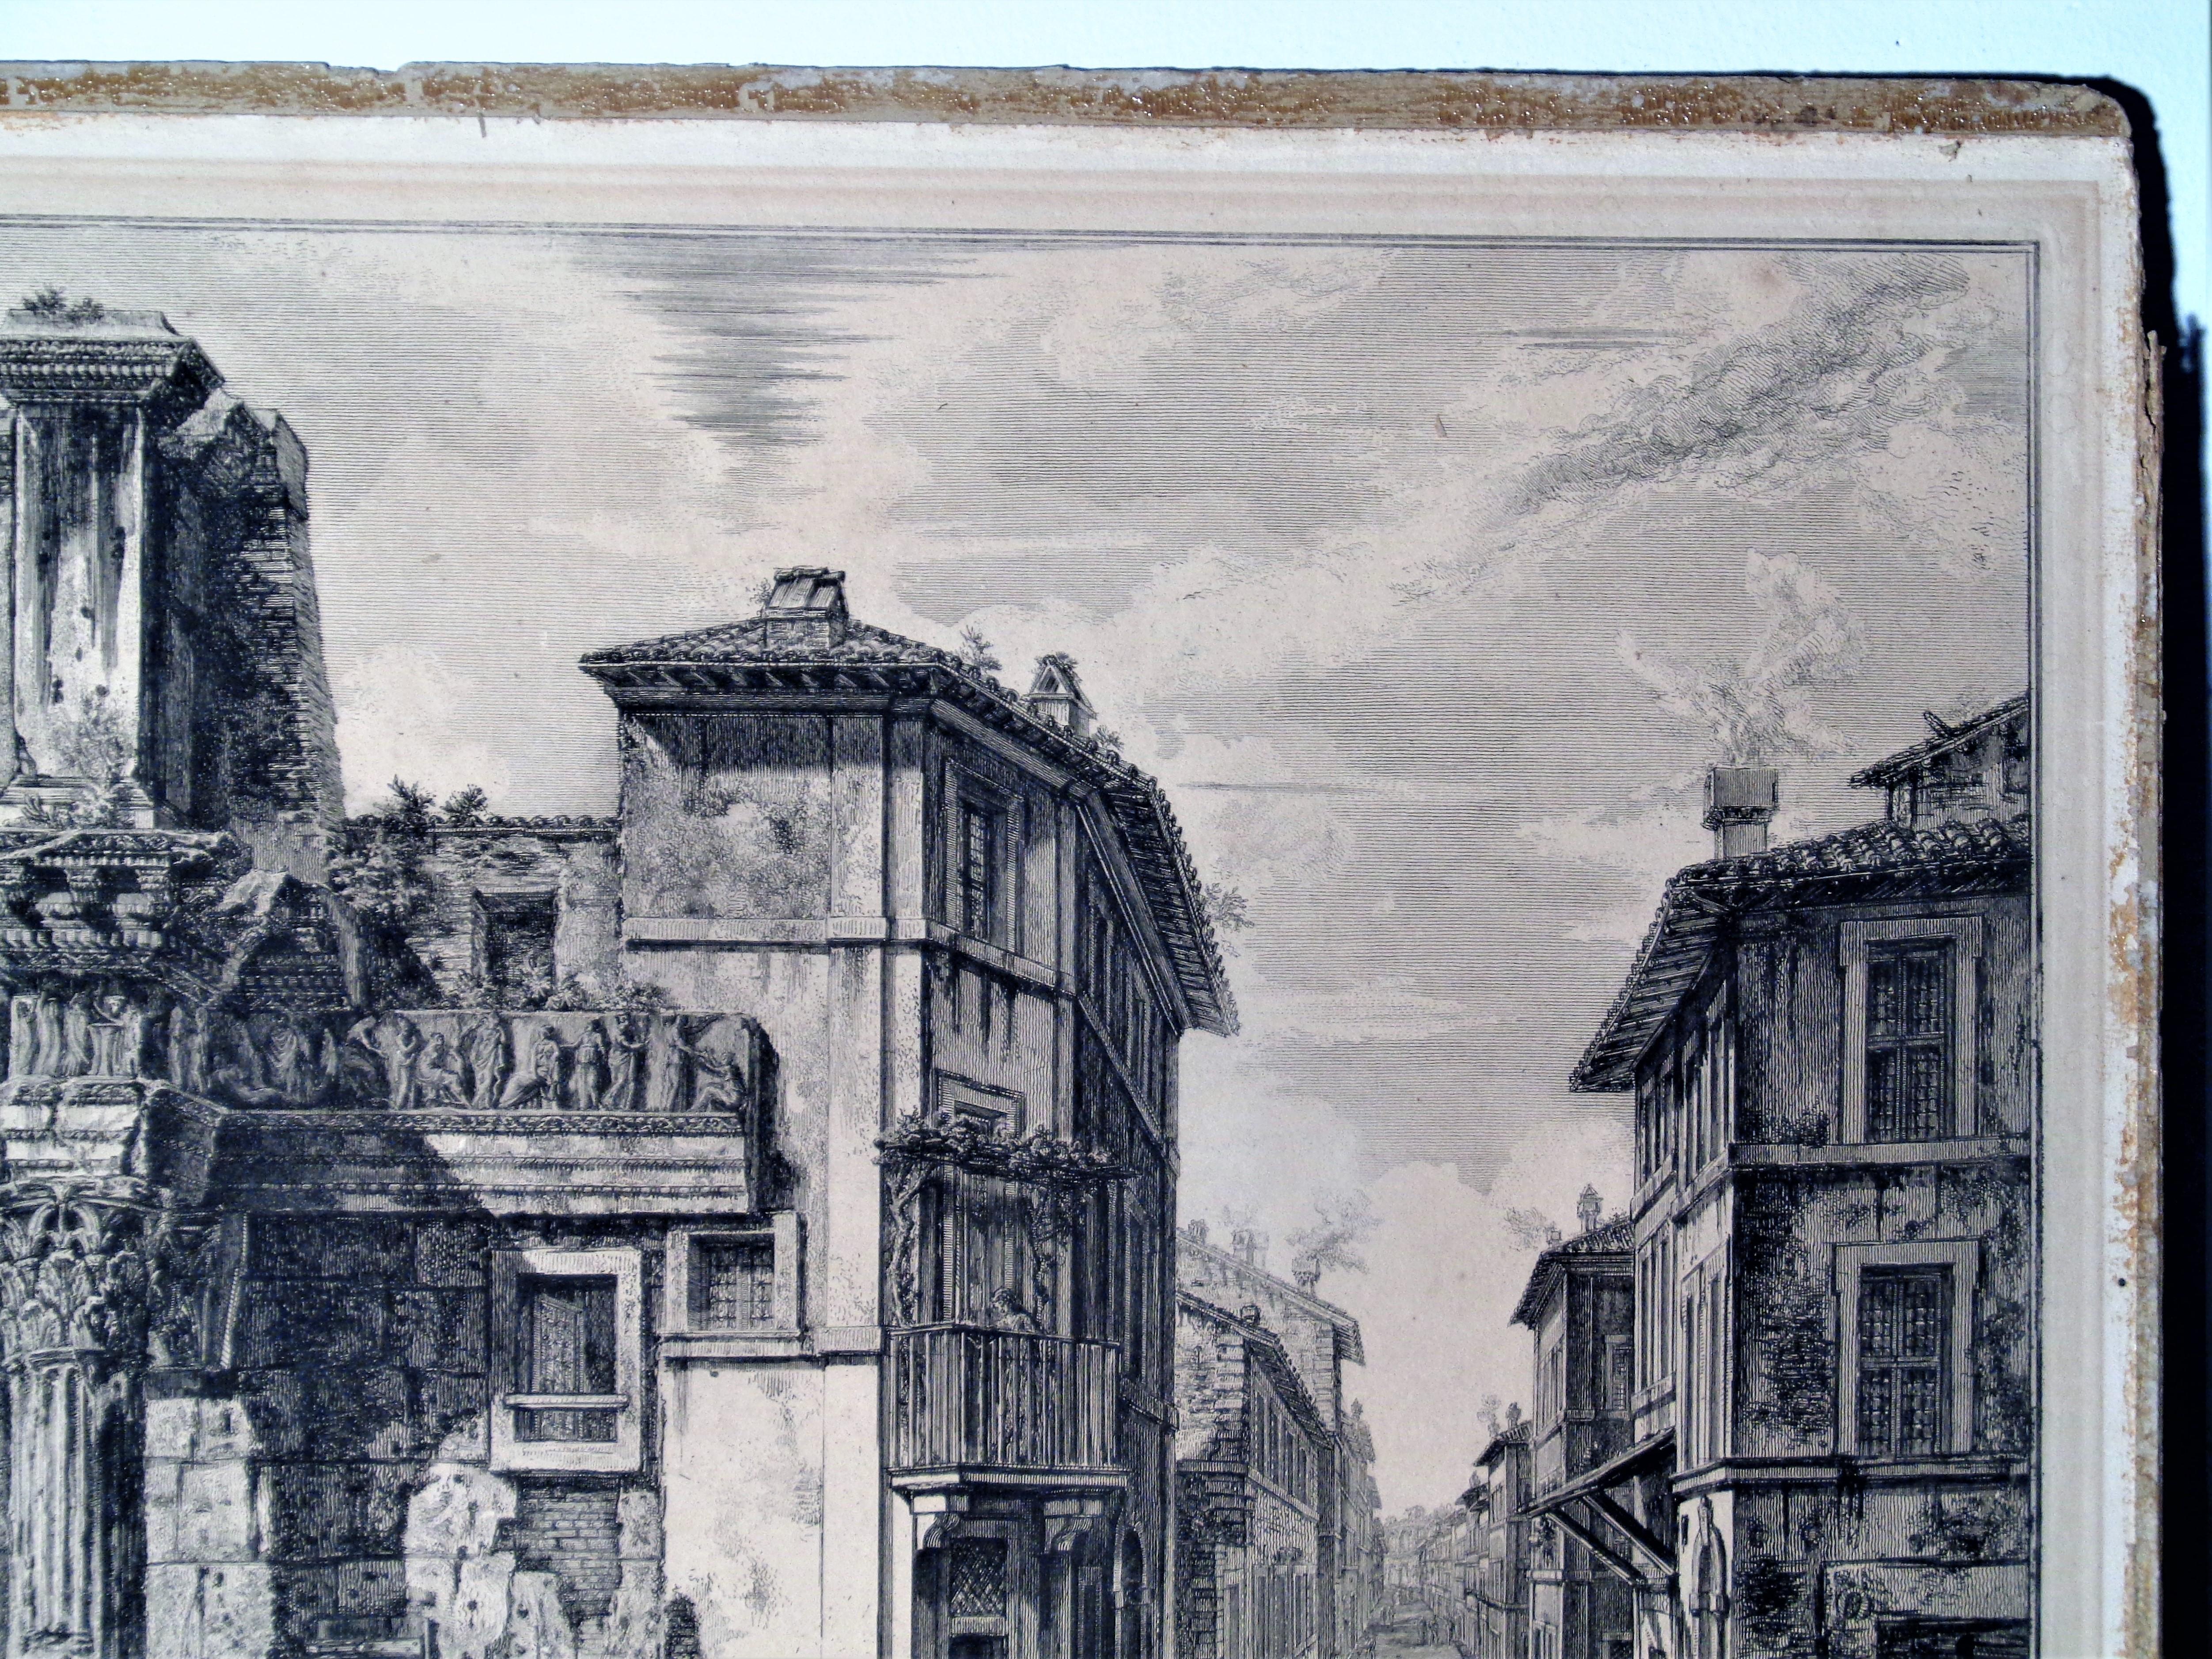 Paper After Giovanni Battista Piranesi, The Forum of Nerva - Francesco Piranesi, 1800